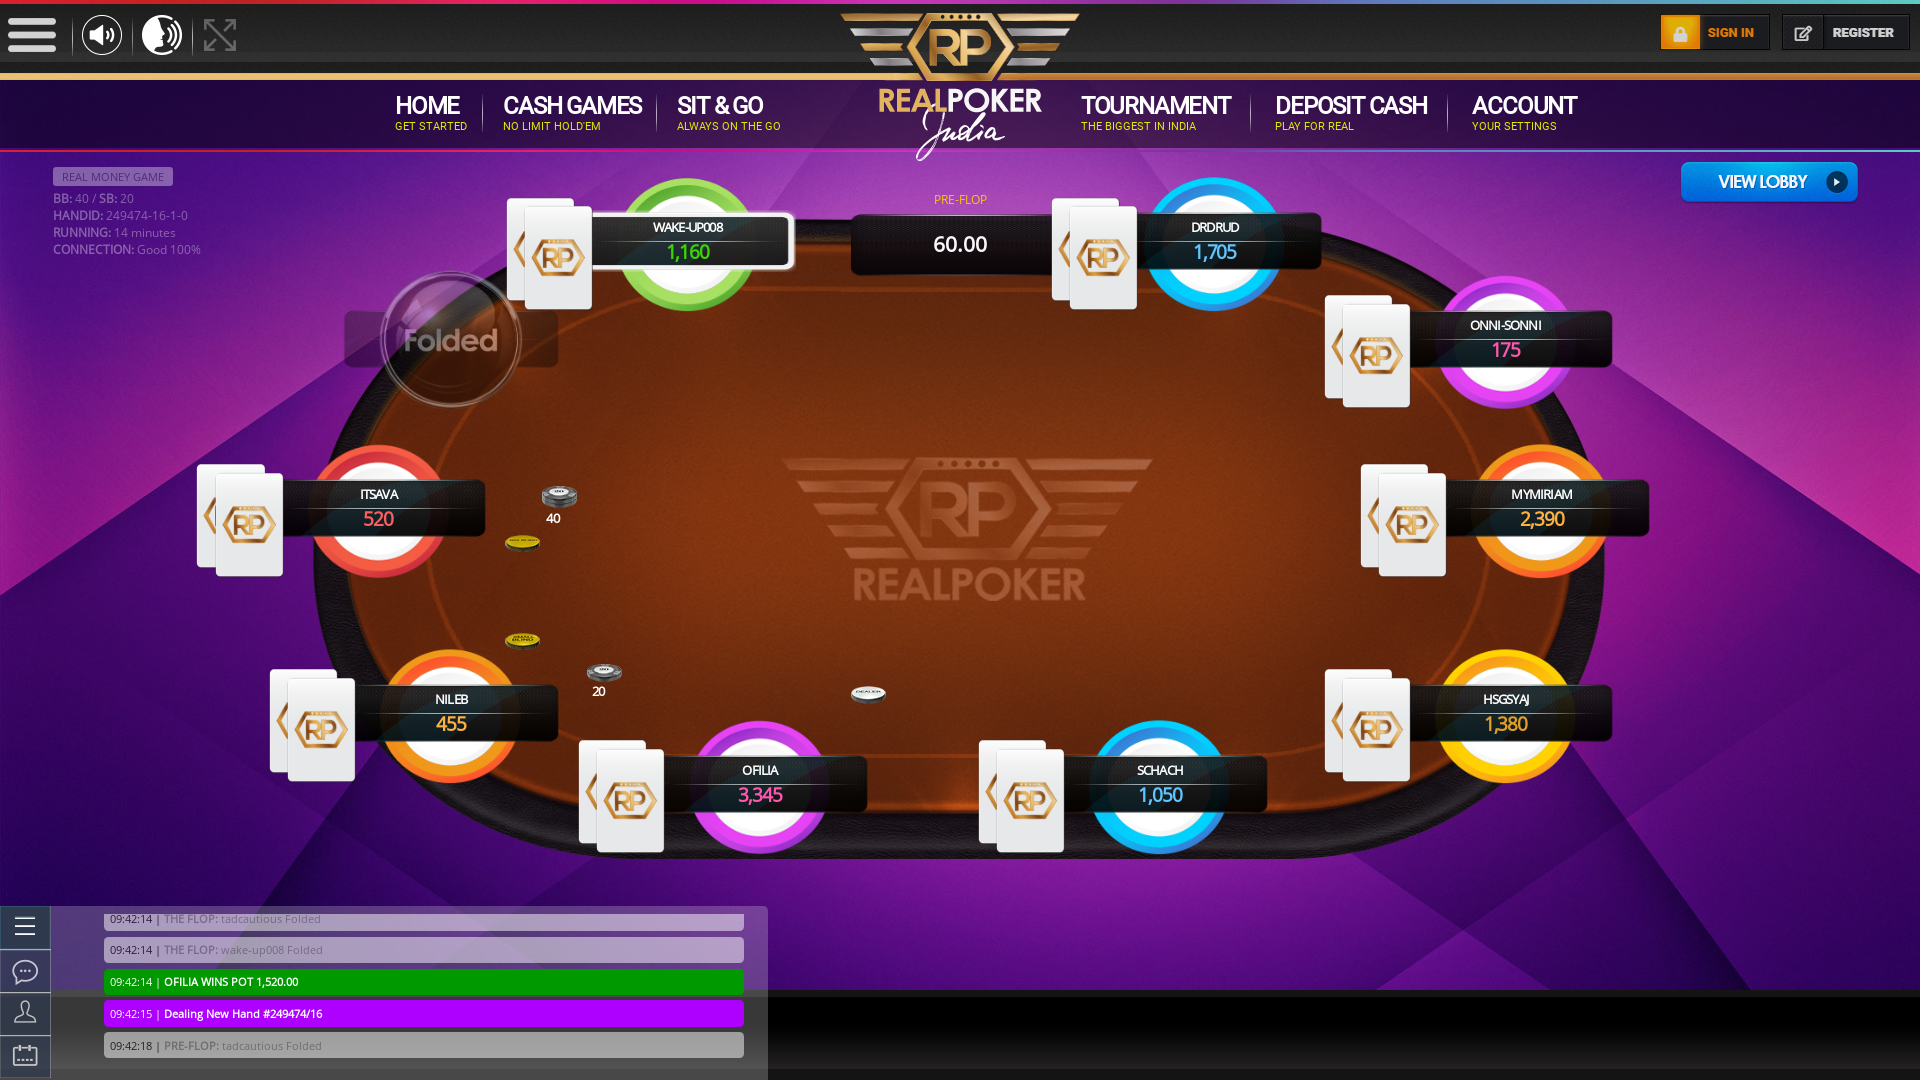 JP Nagar, Bangalore Poker Website from 28th October